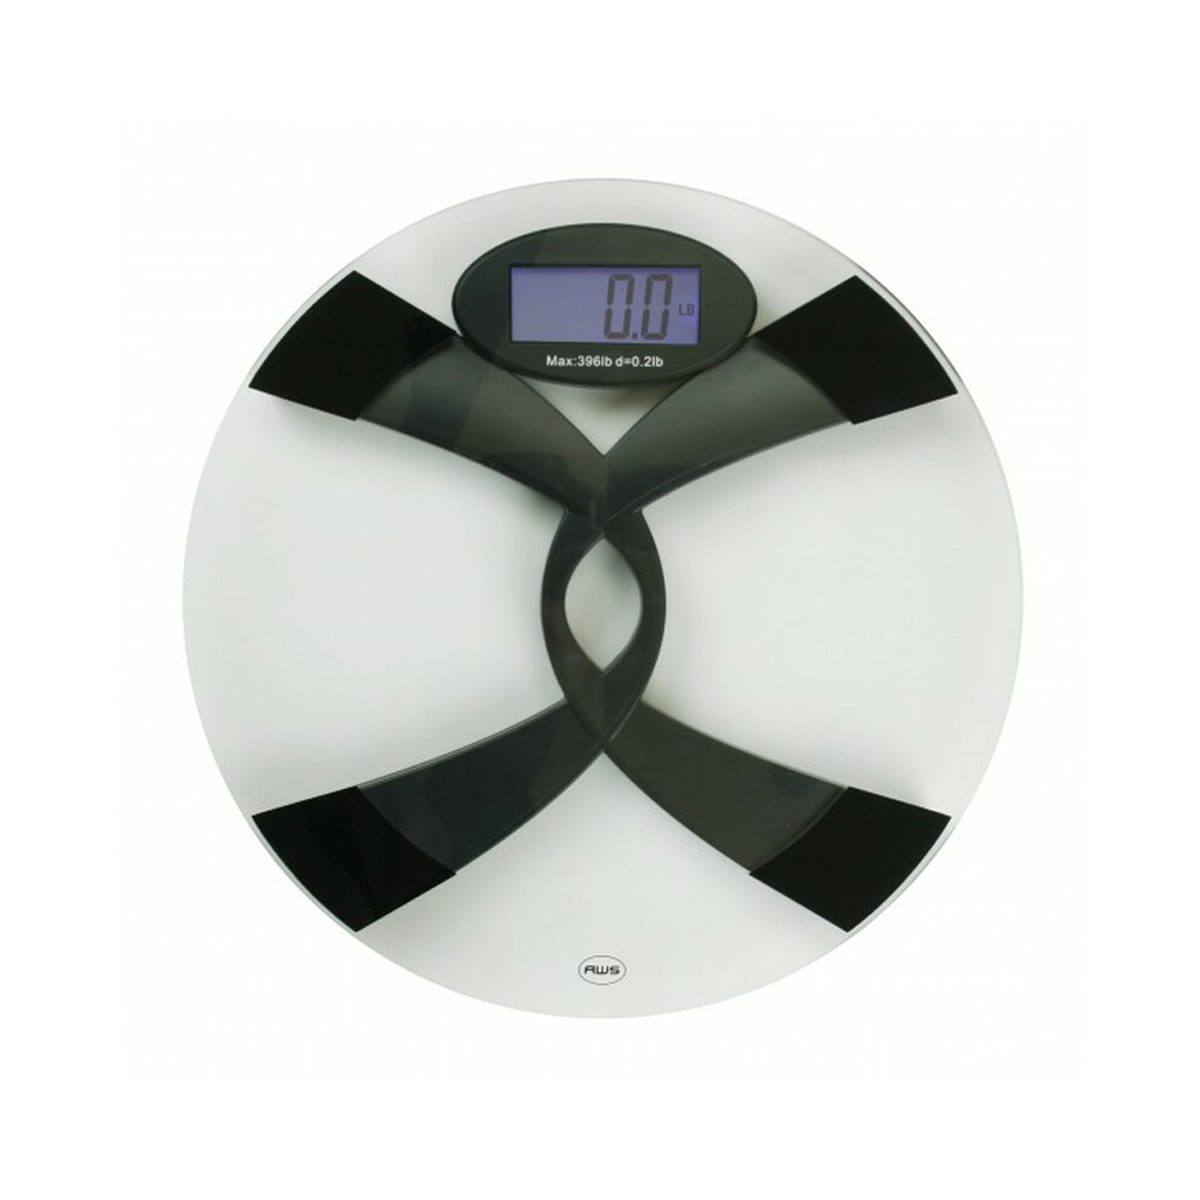 American Weigh Scales Talking Bathroom Scale 330CVS